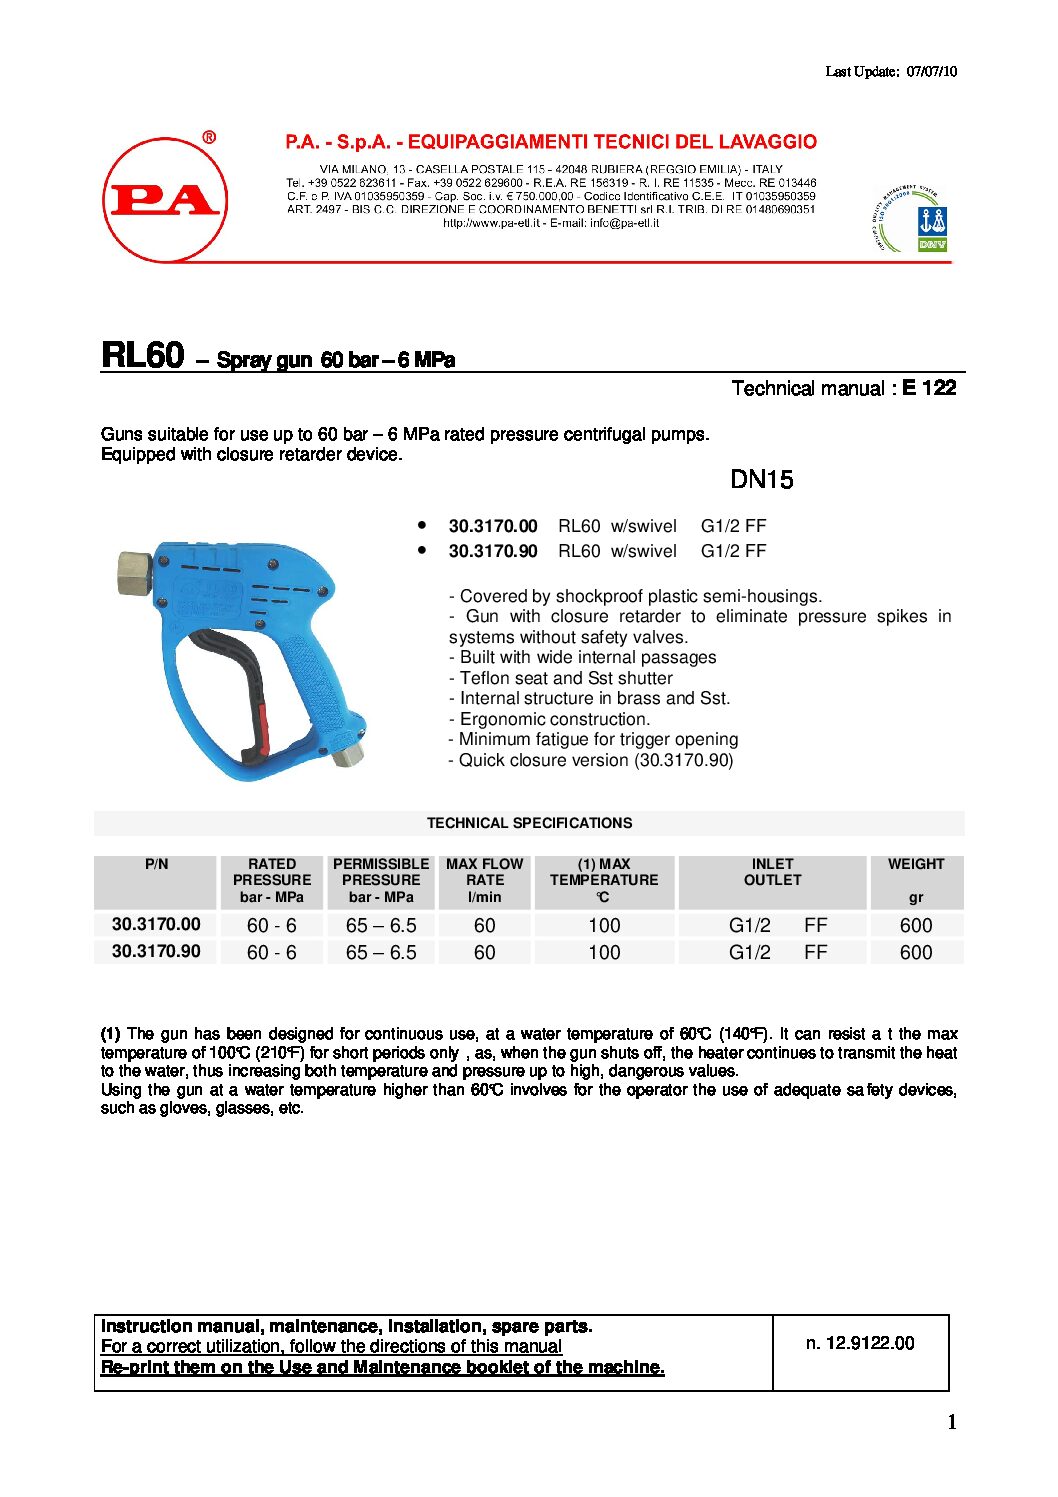 PA RL60 spray gun technical information